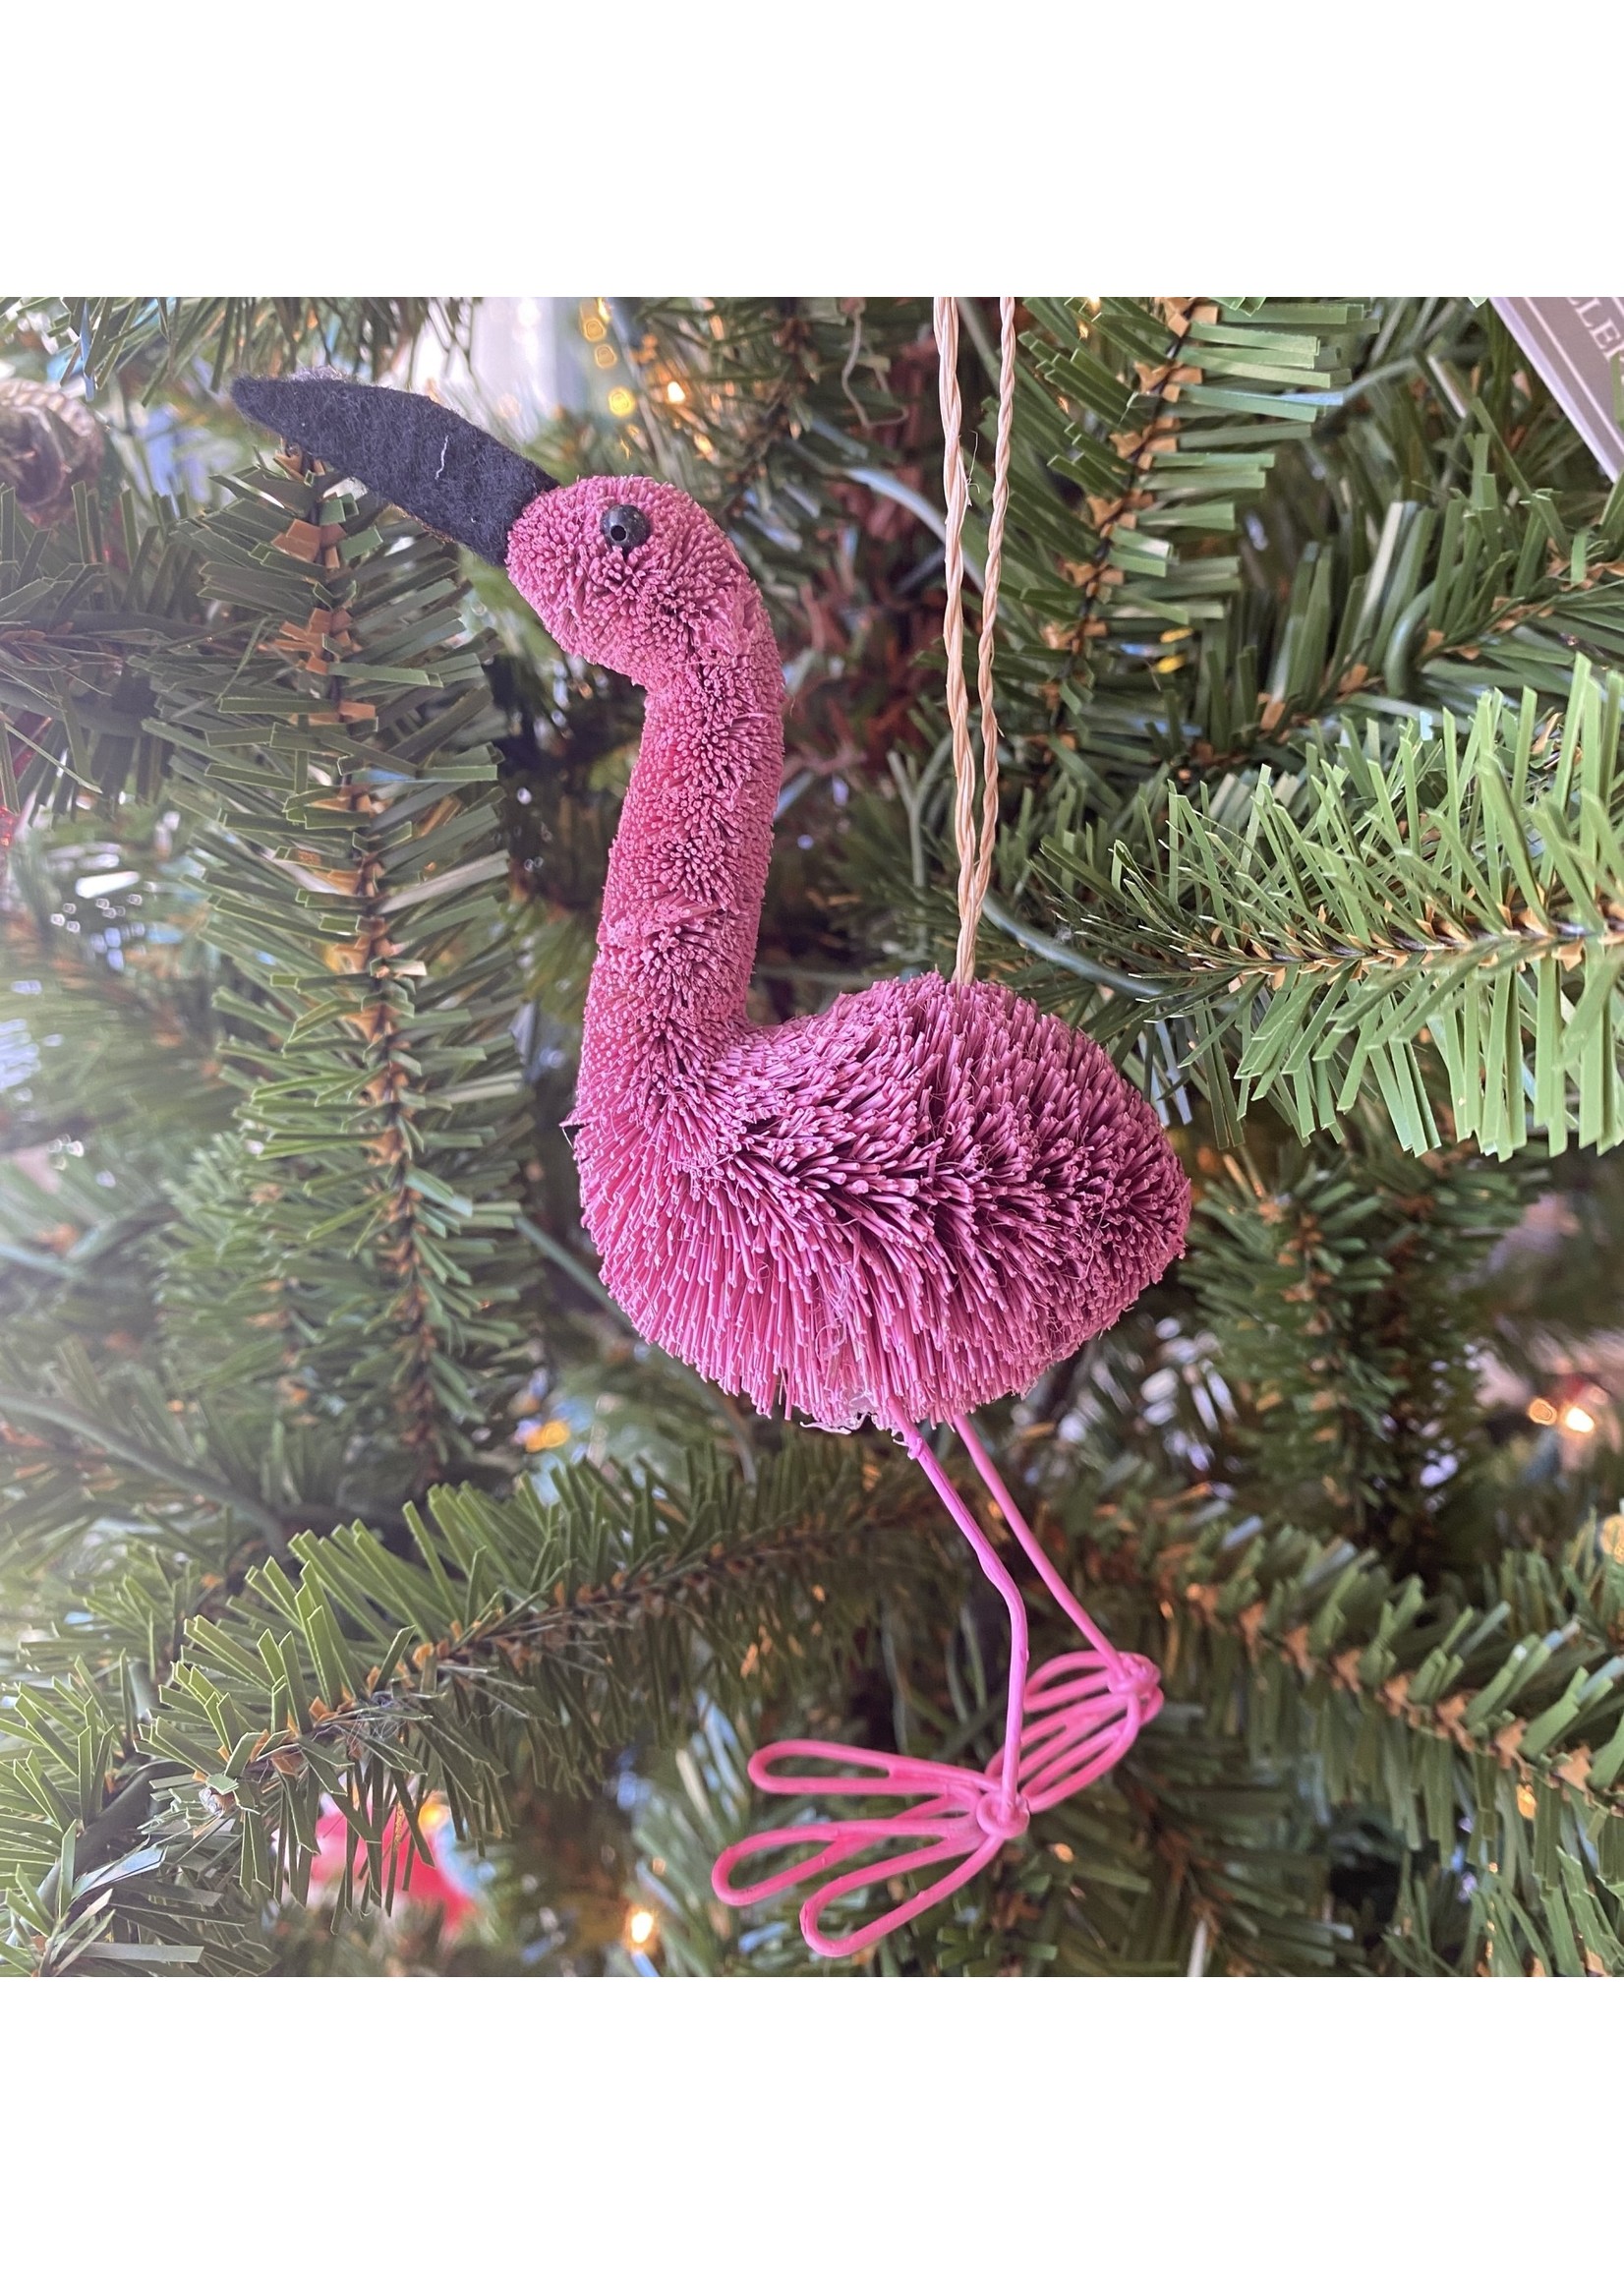 Silk Road Bazaar Flamingo Ornament